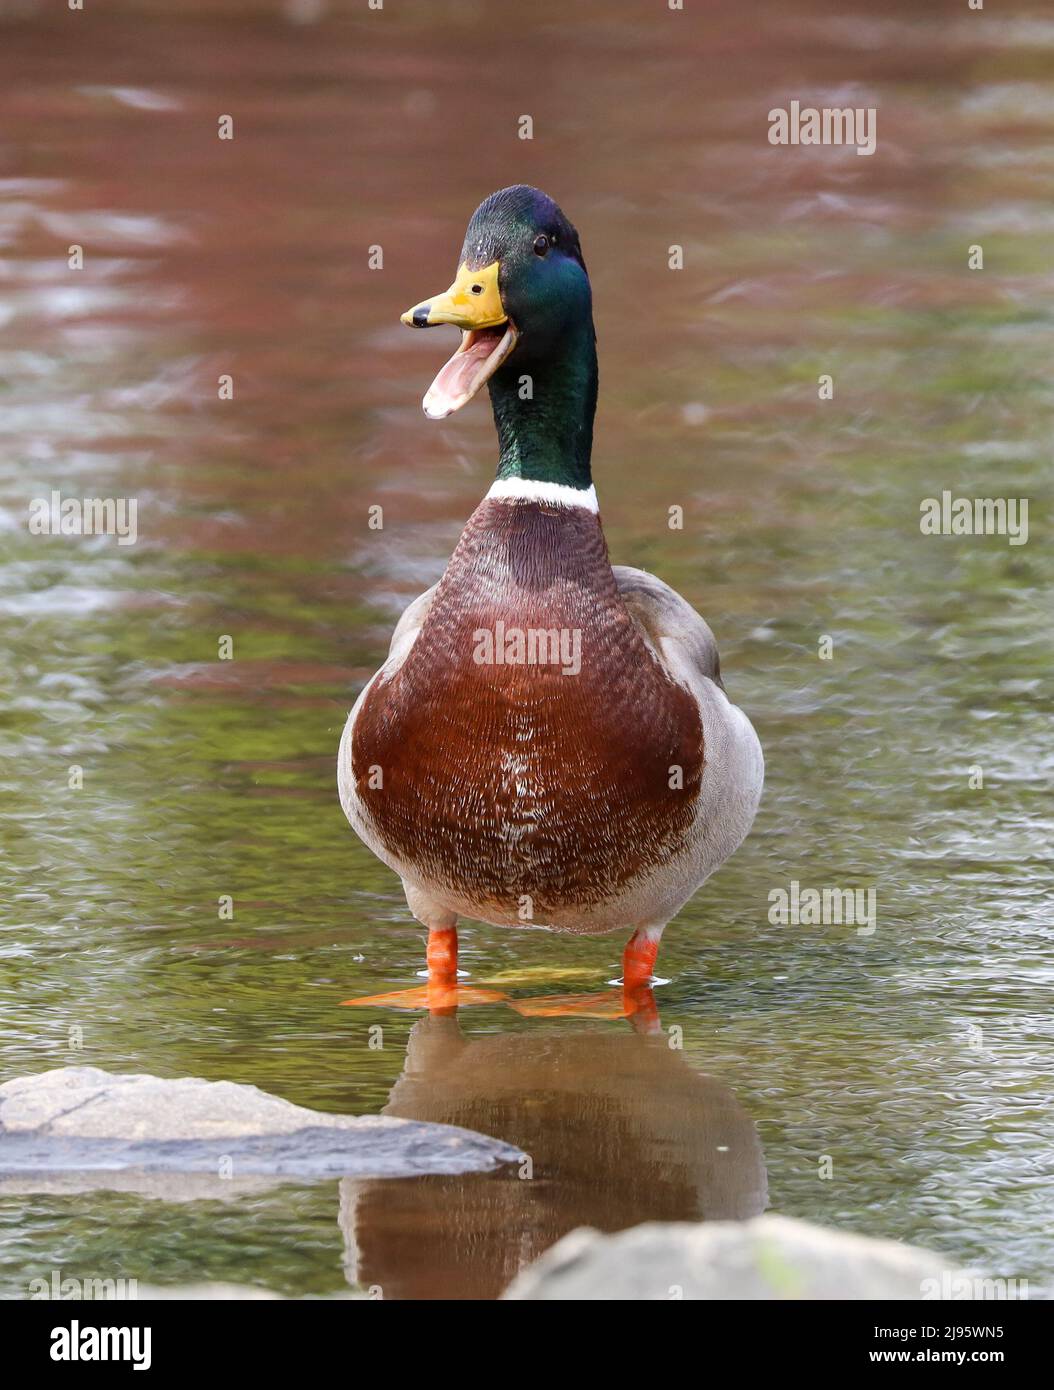 Mallard Duck in Pond, Laughing, Dundee, Scotland Stock Photo